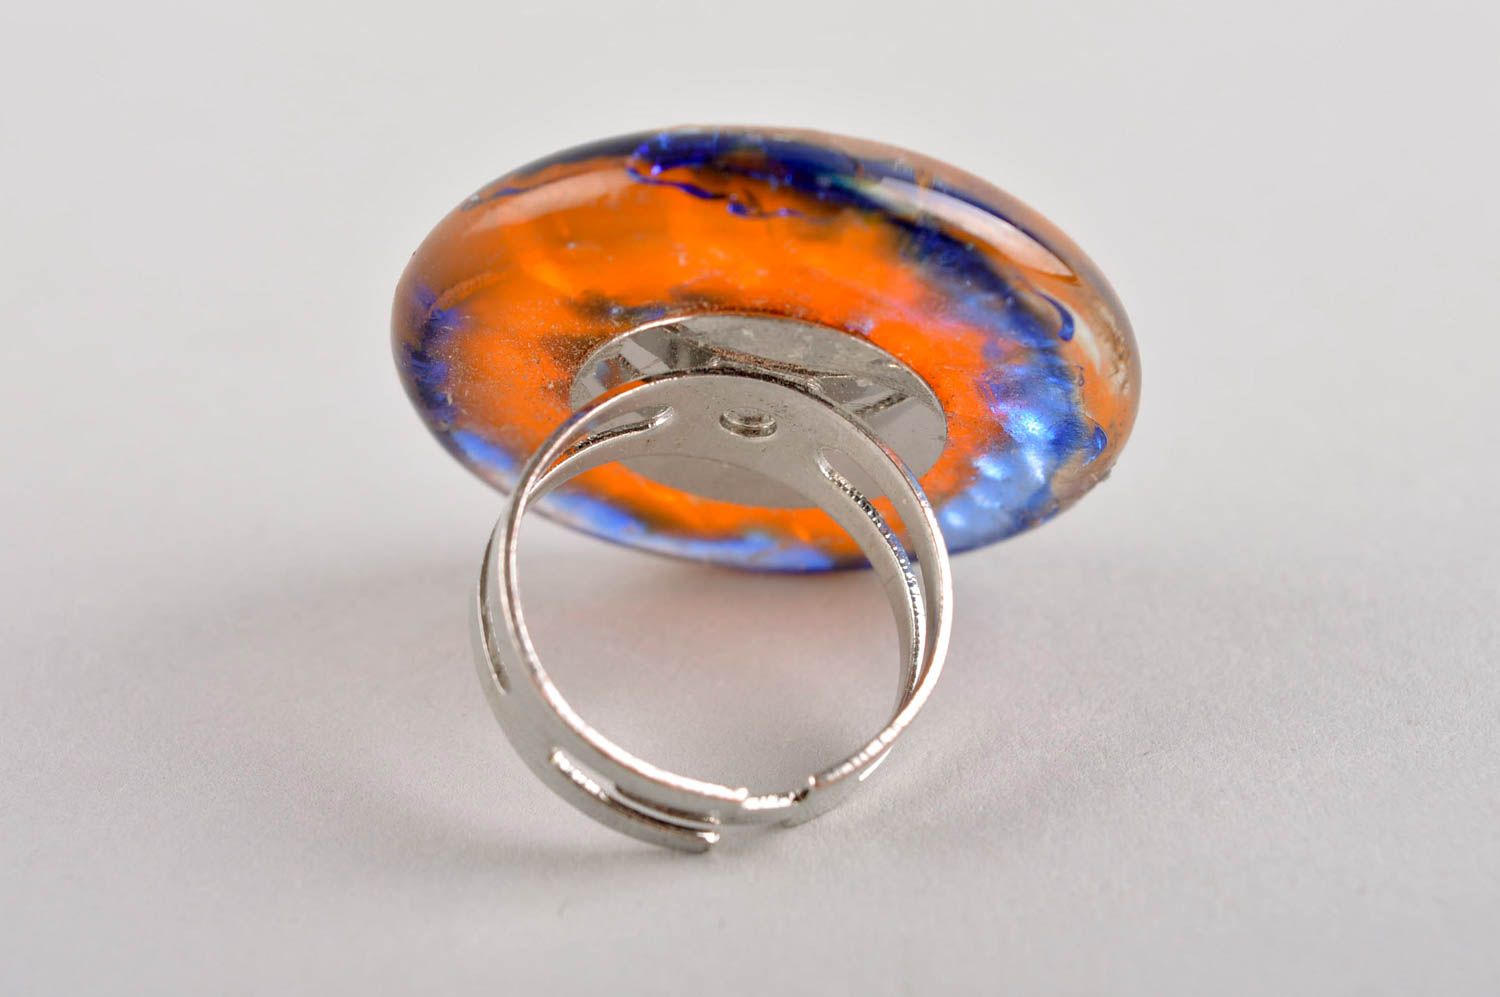 Handmade glass ring designer ring unusual jewelry glass accessory gift ideas photo 4